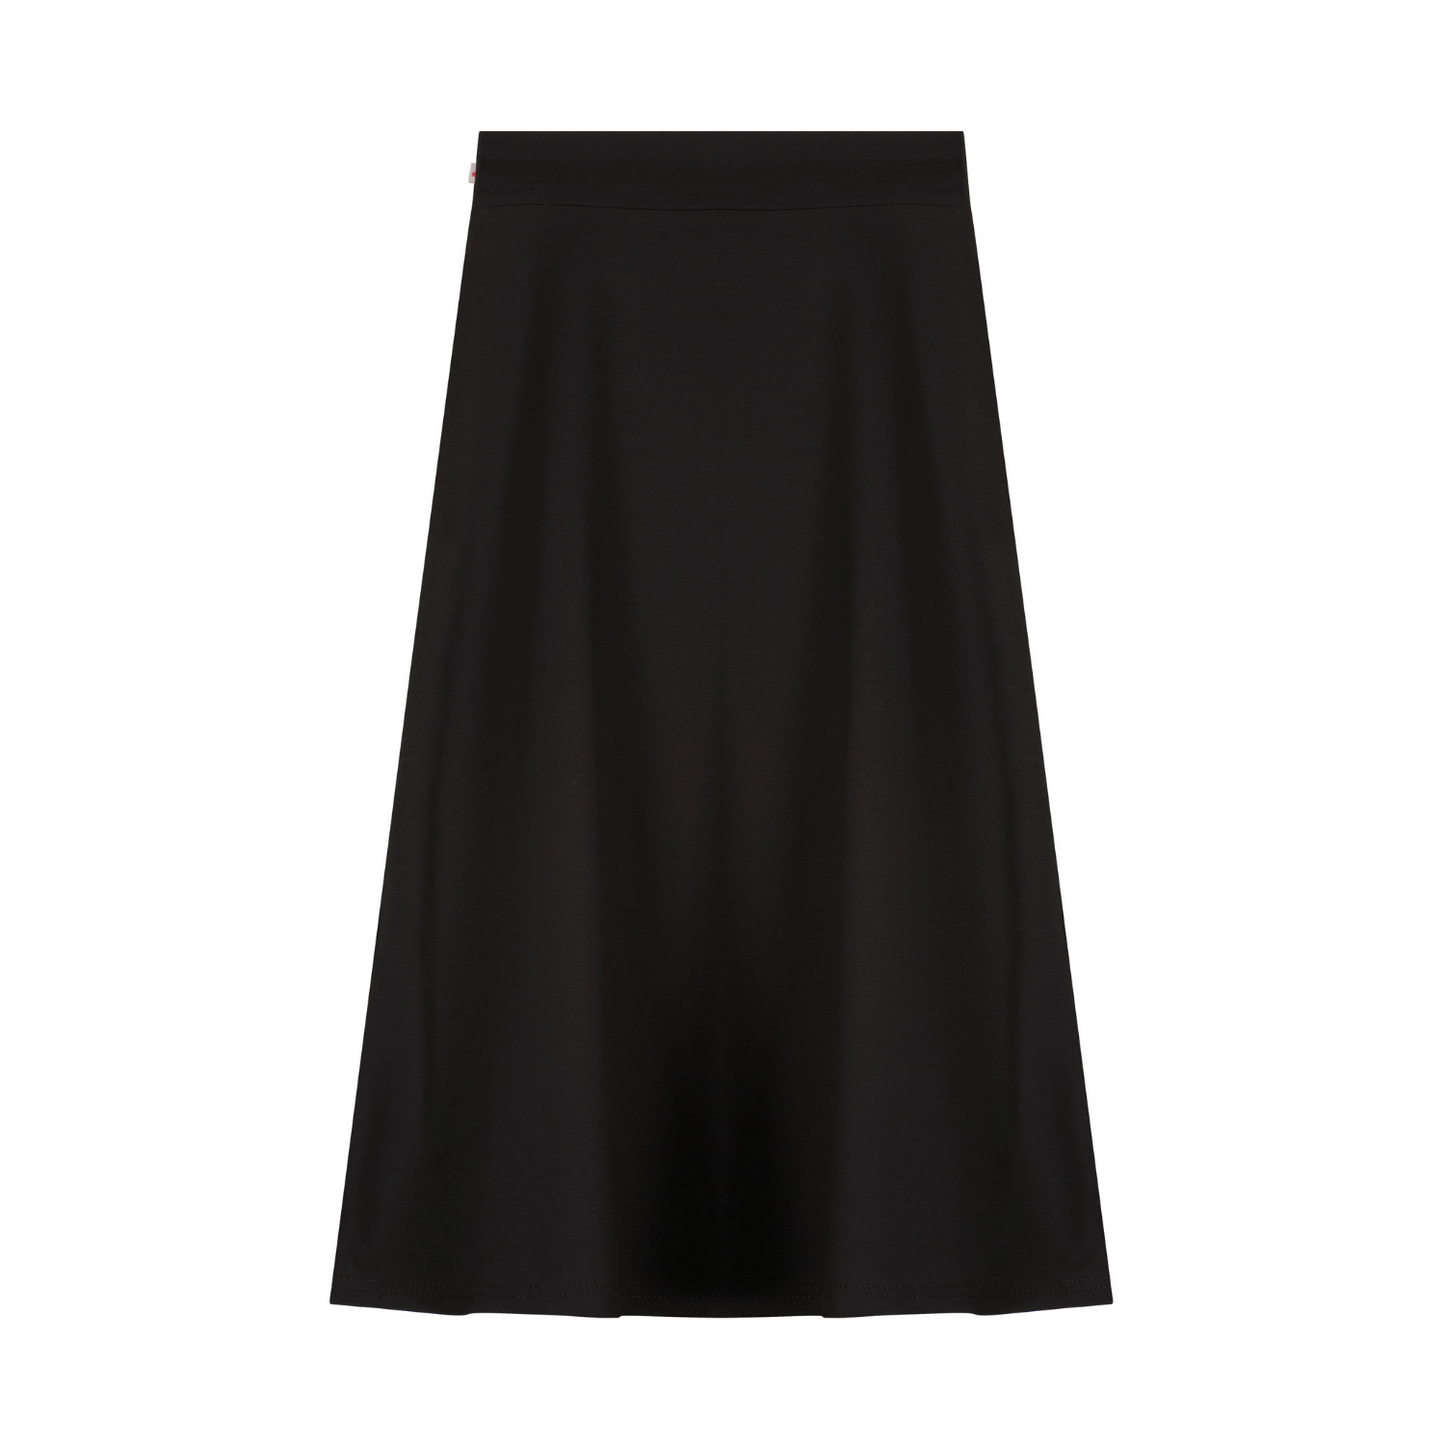 NEW Girls Camp Skirt Maxi- Black